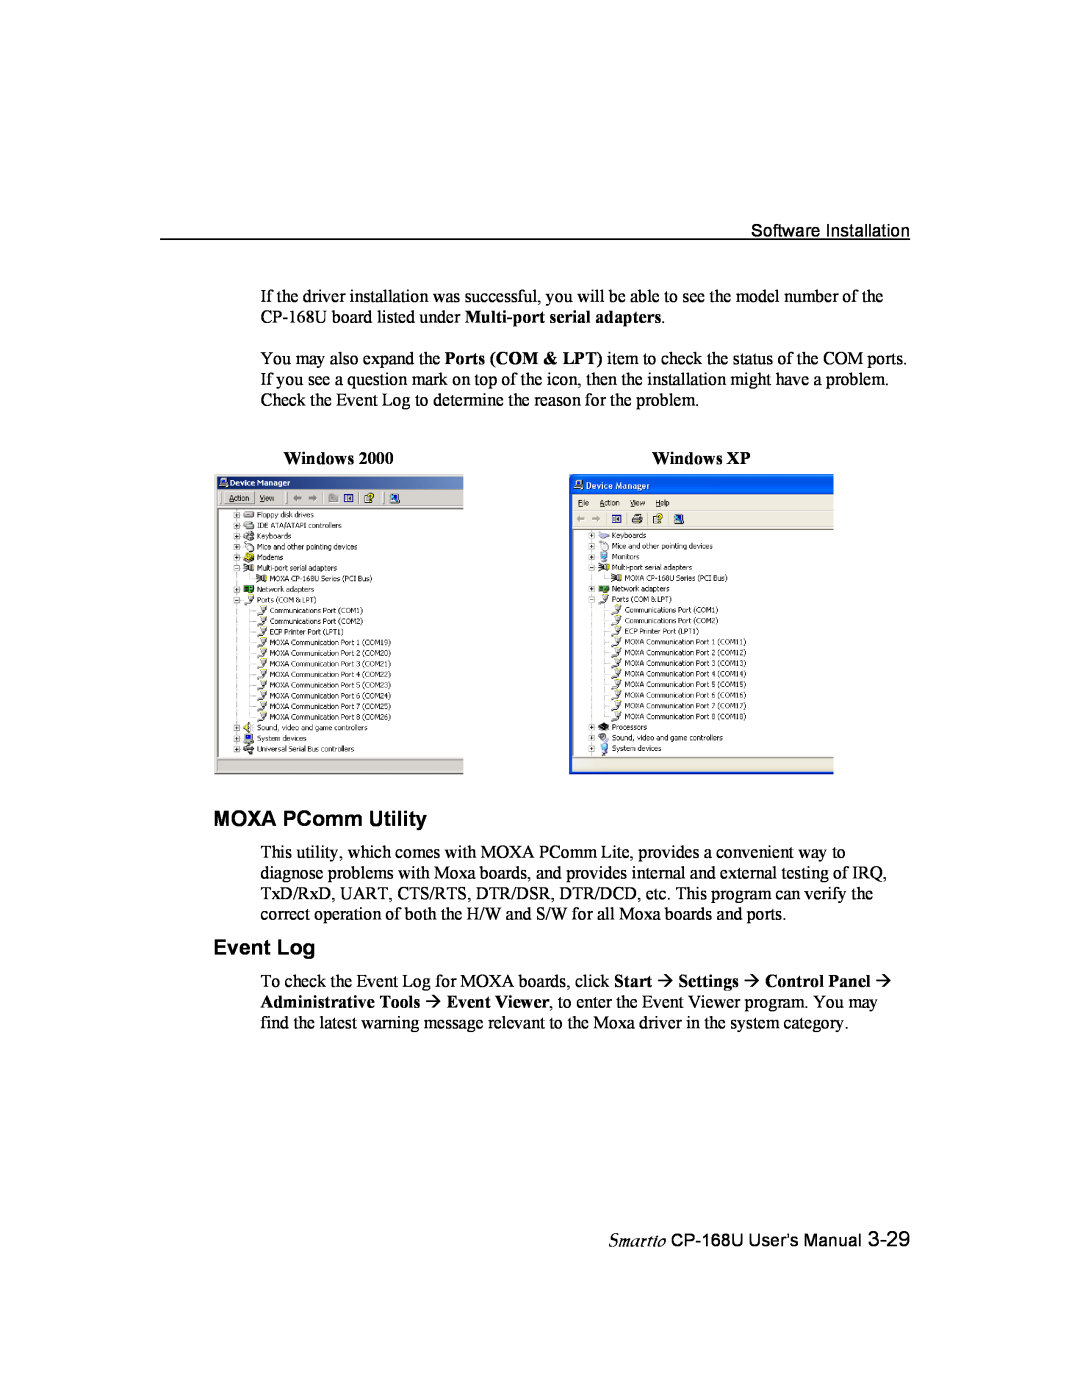 Moxa Technologies CP-168U user manual MOXA PComm Utility, Event Log, Windows XP 